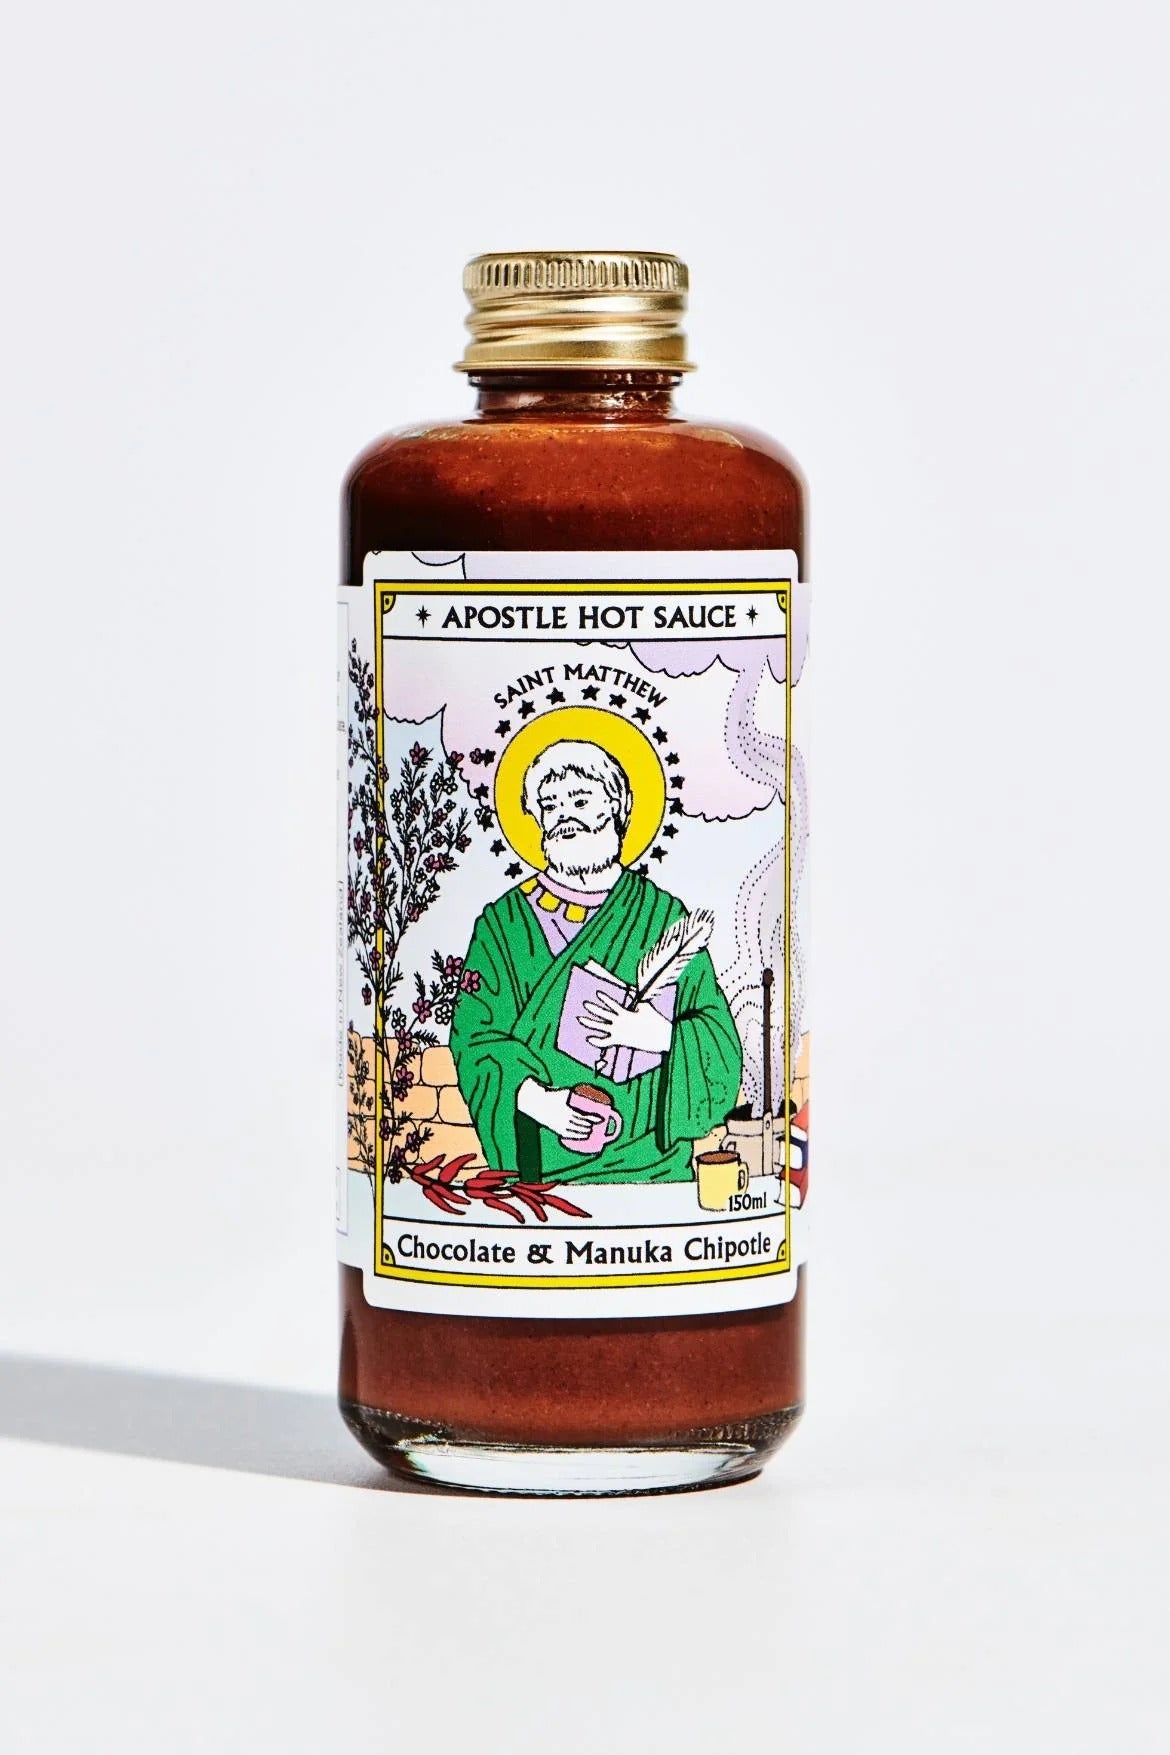 Apostle Hot Sauce - St. Matthew Chocolate & Manuka Chipotle